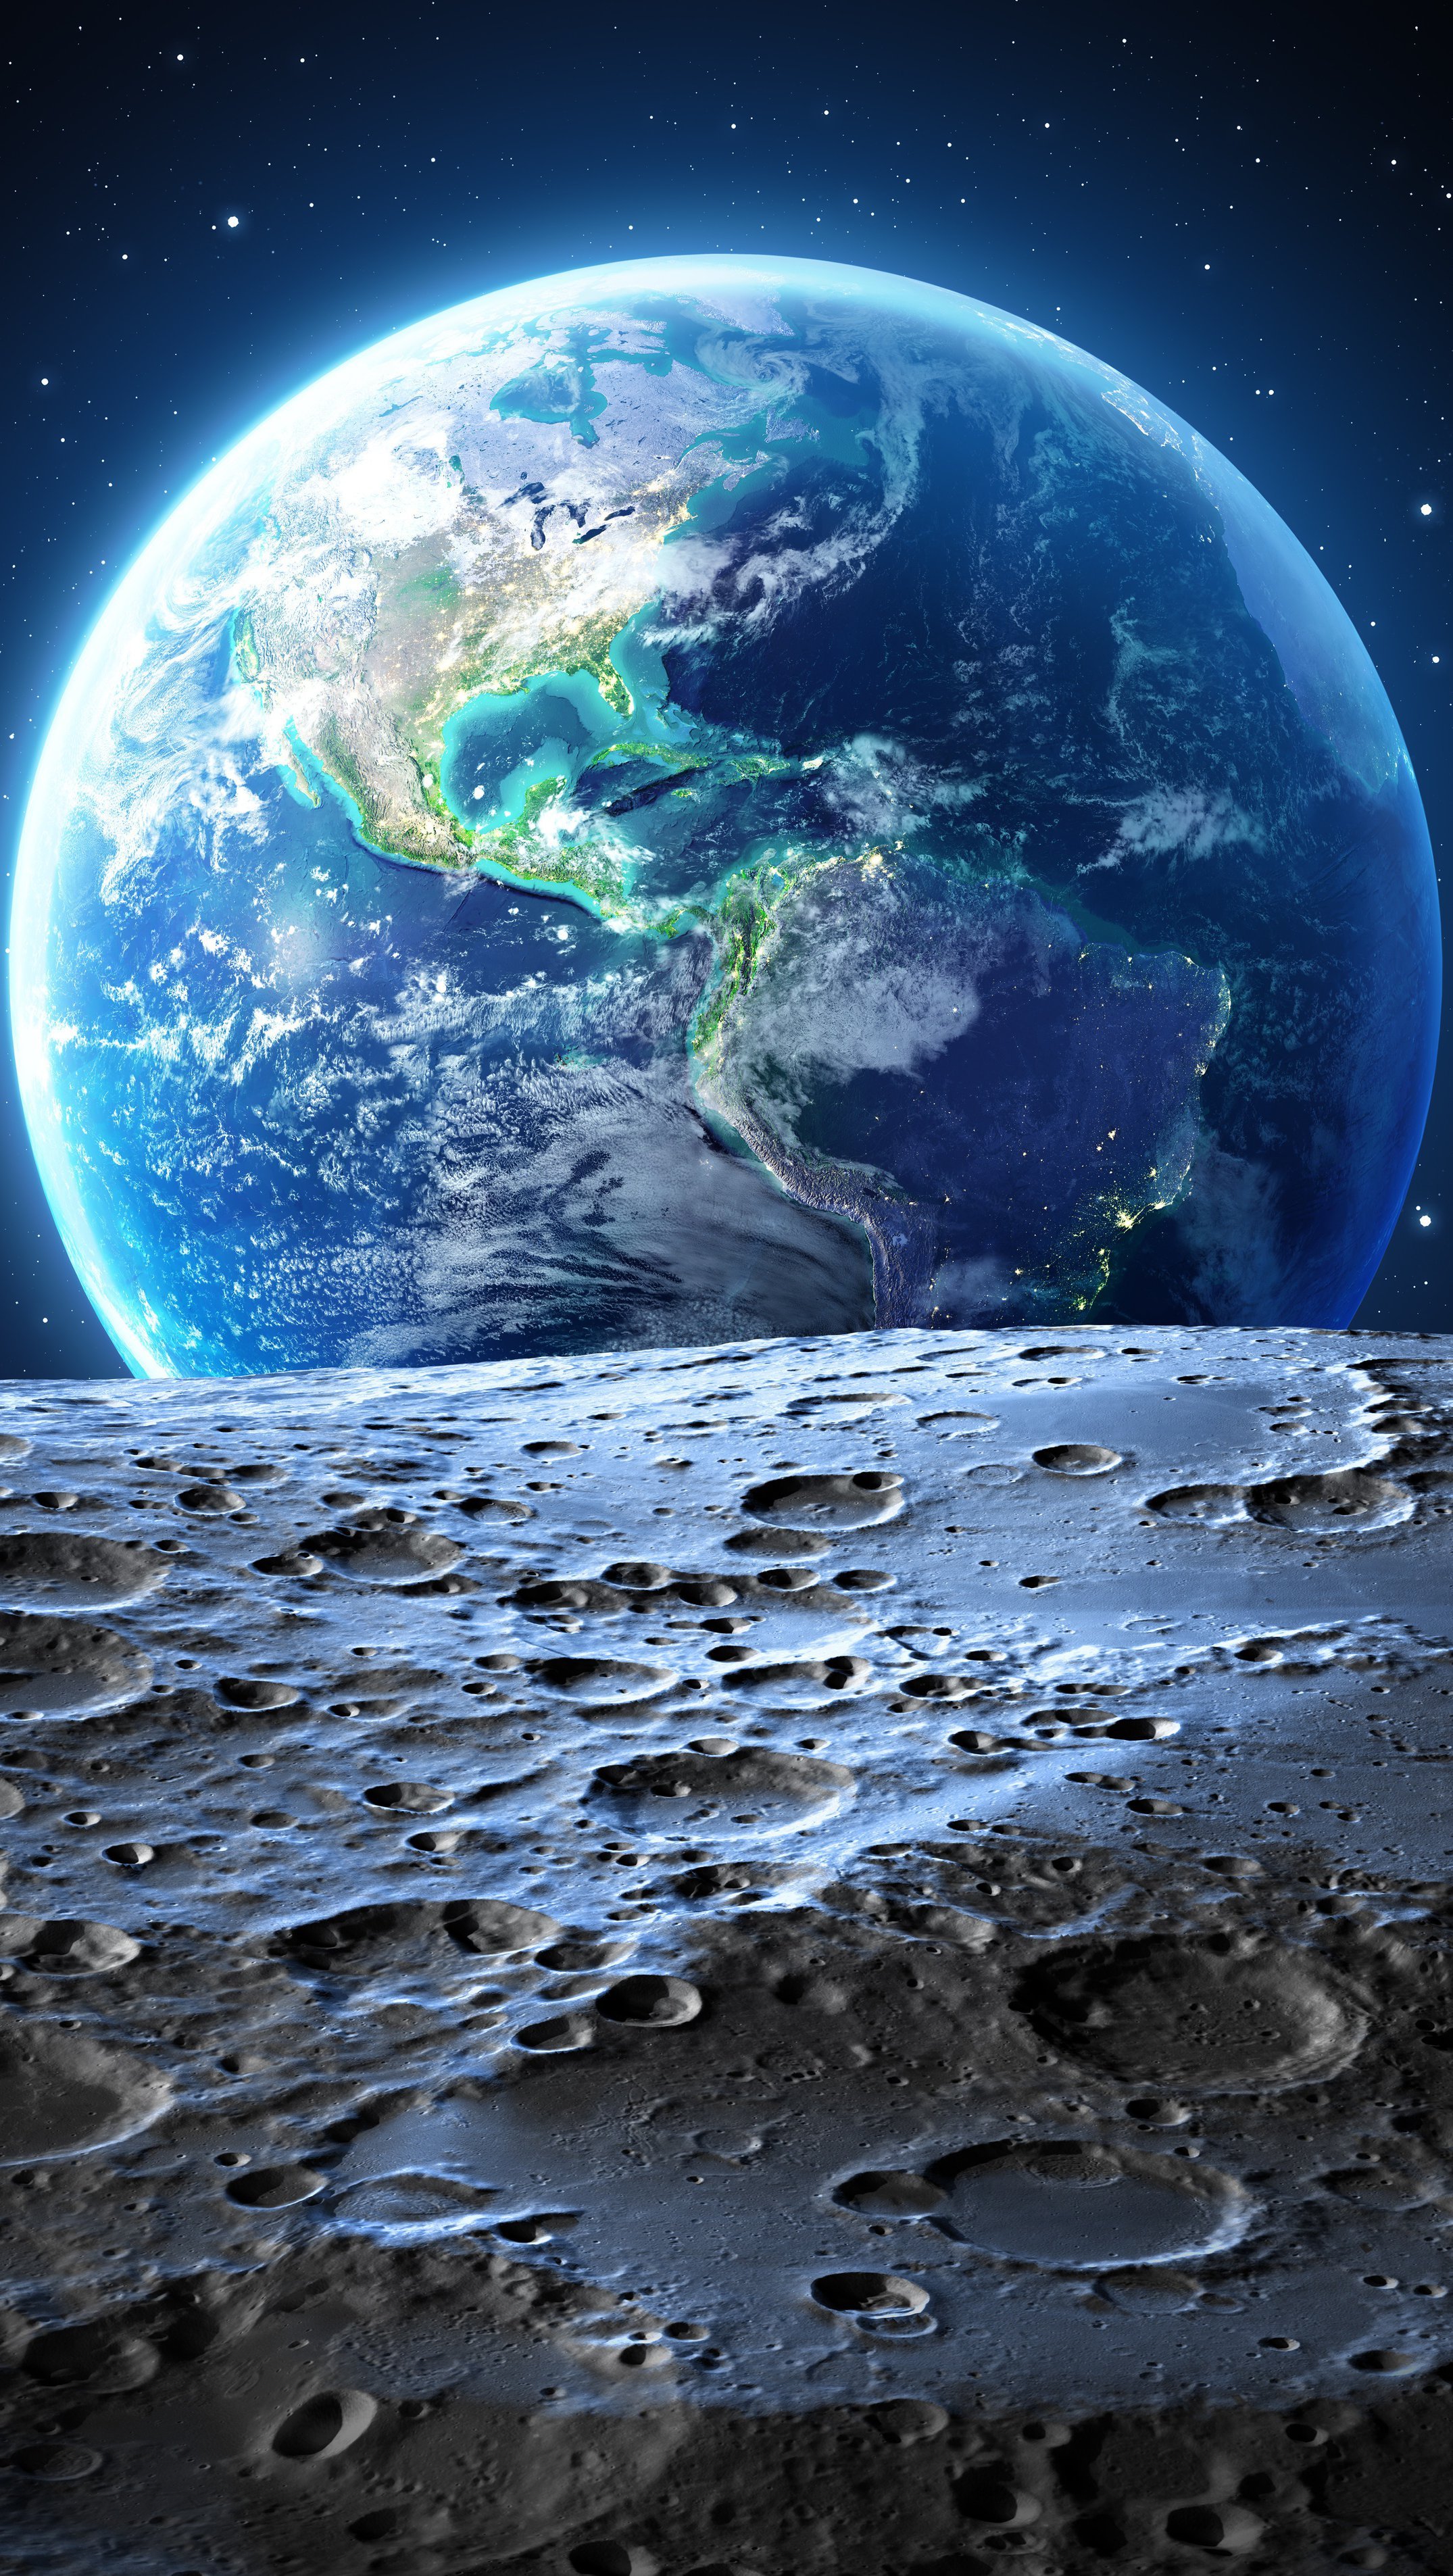 Planet Earth seen from the Moon Wallpaper 4k HD ID:3339